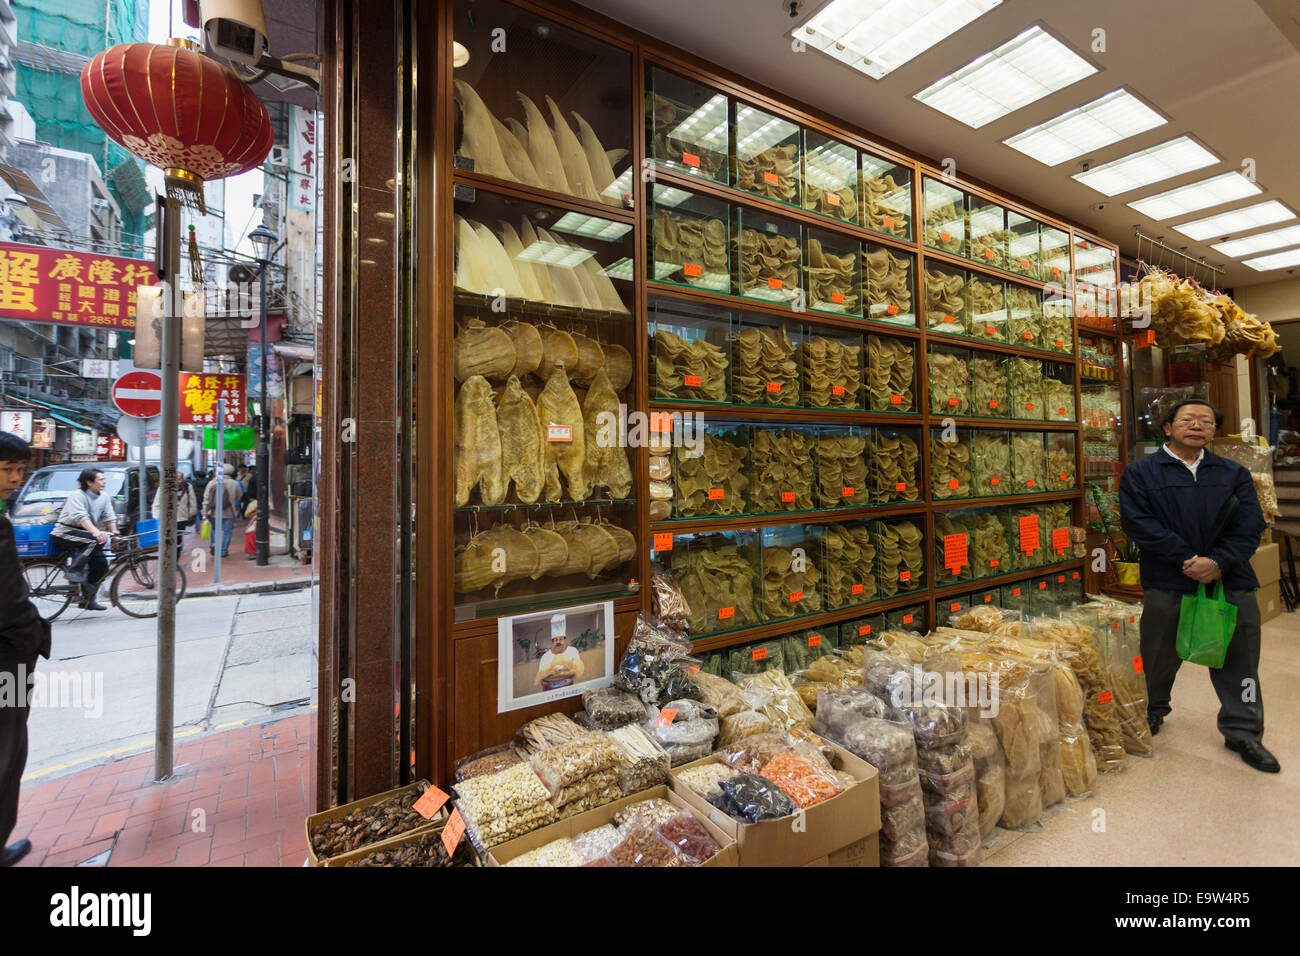 Shop selling sharks' fins, Sheung wan, Hong Kong Stock Photo